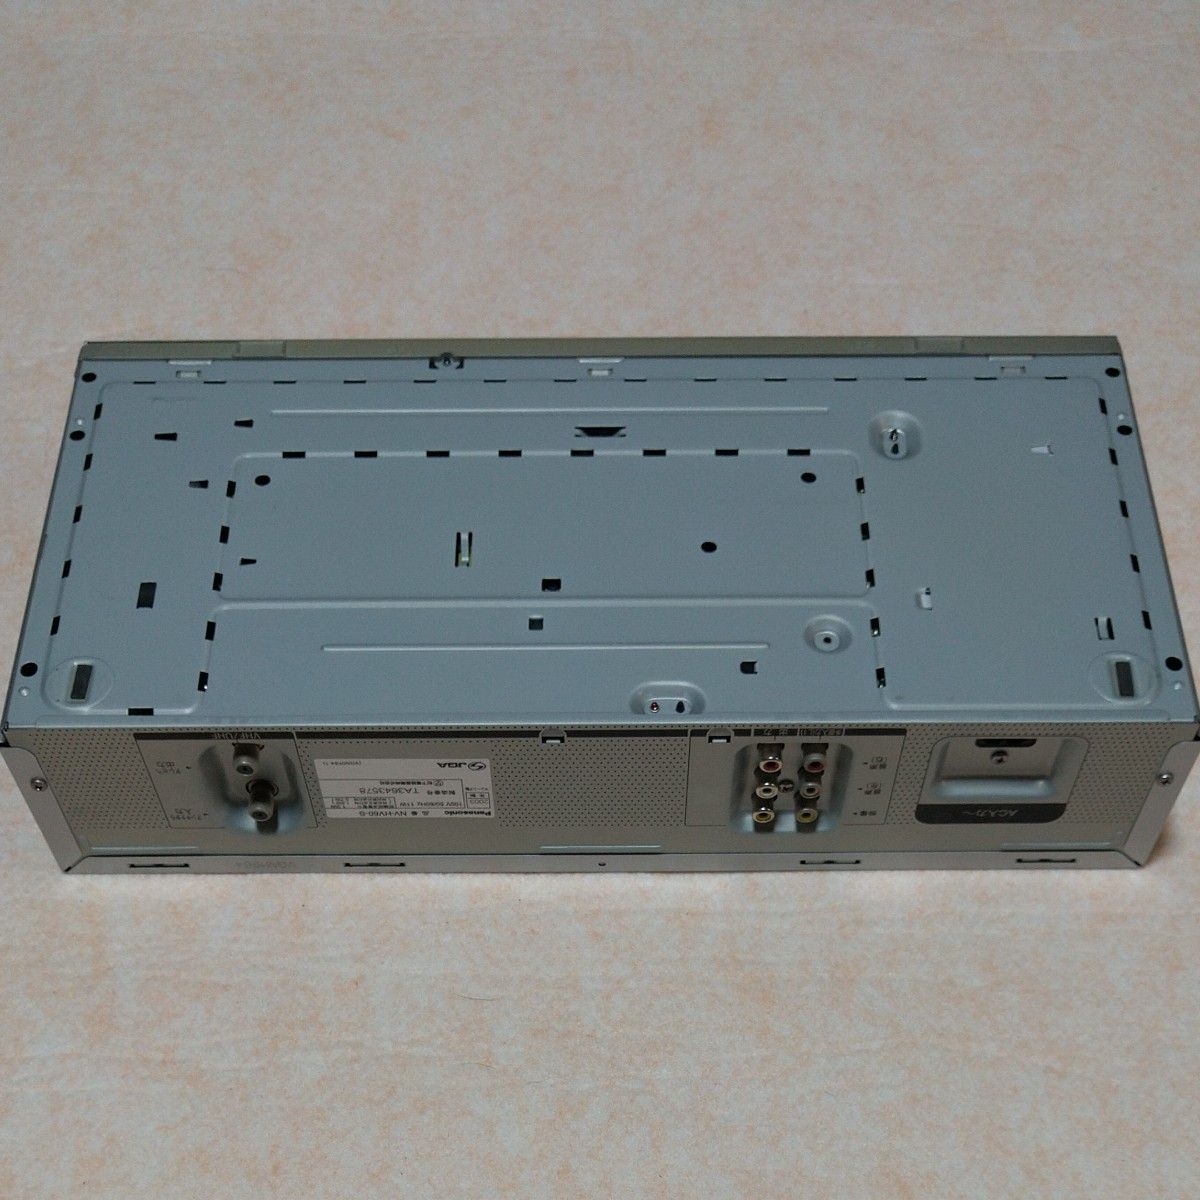 Panasonic VHSビデオデッキ　NV-HV60  リモコン付